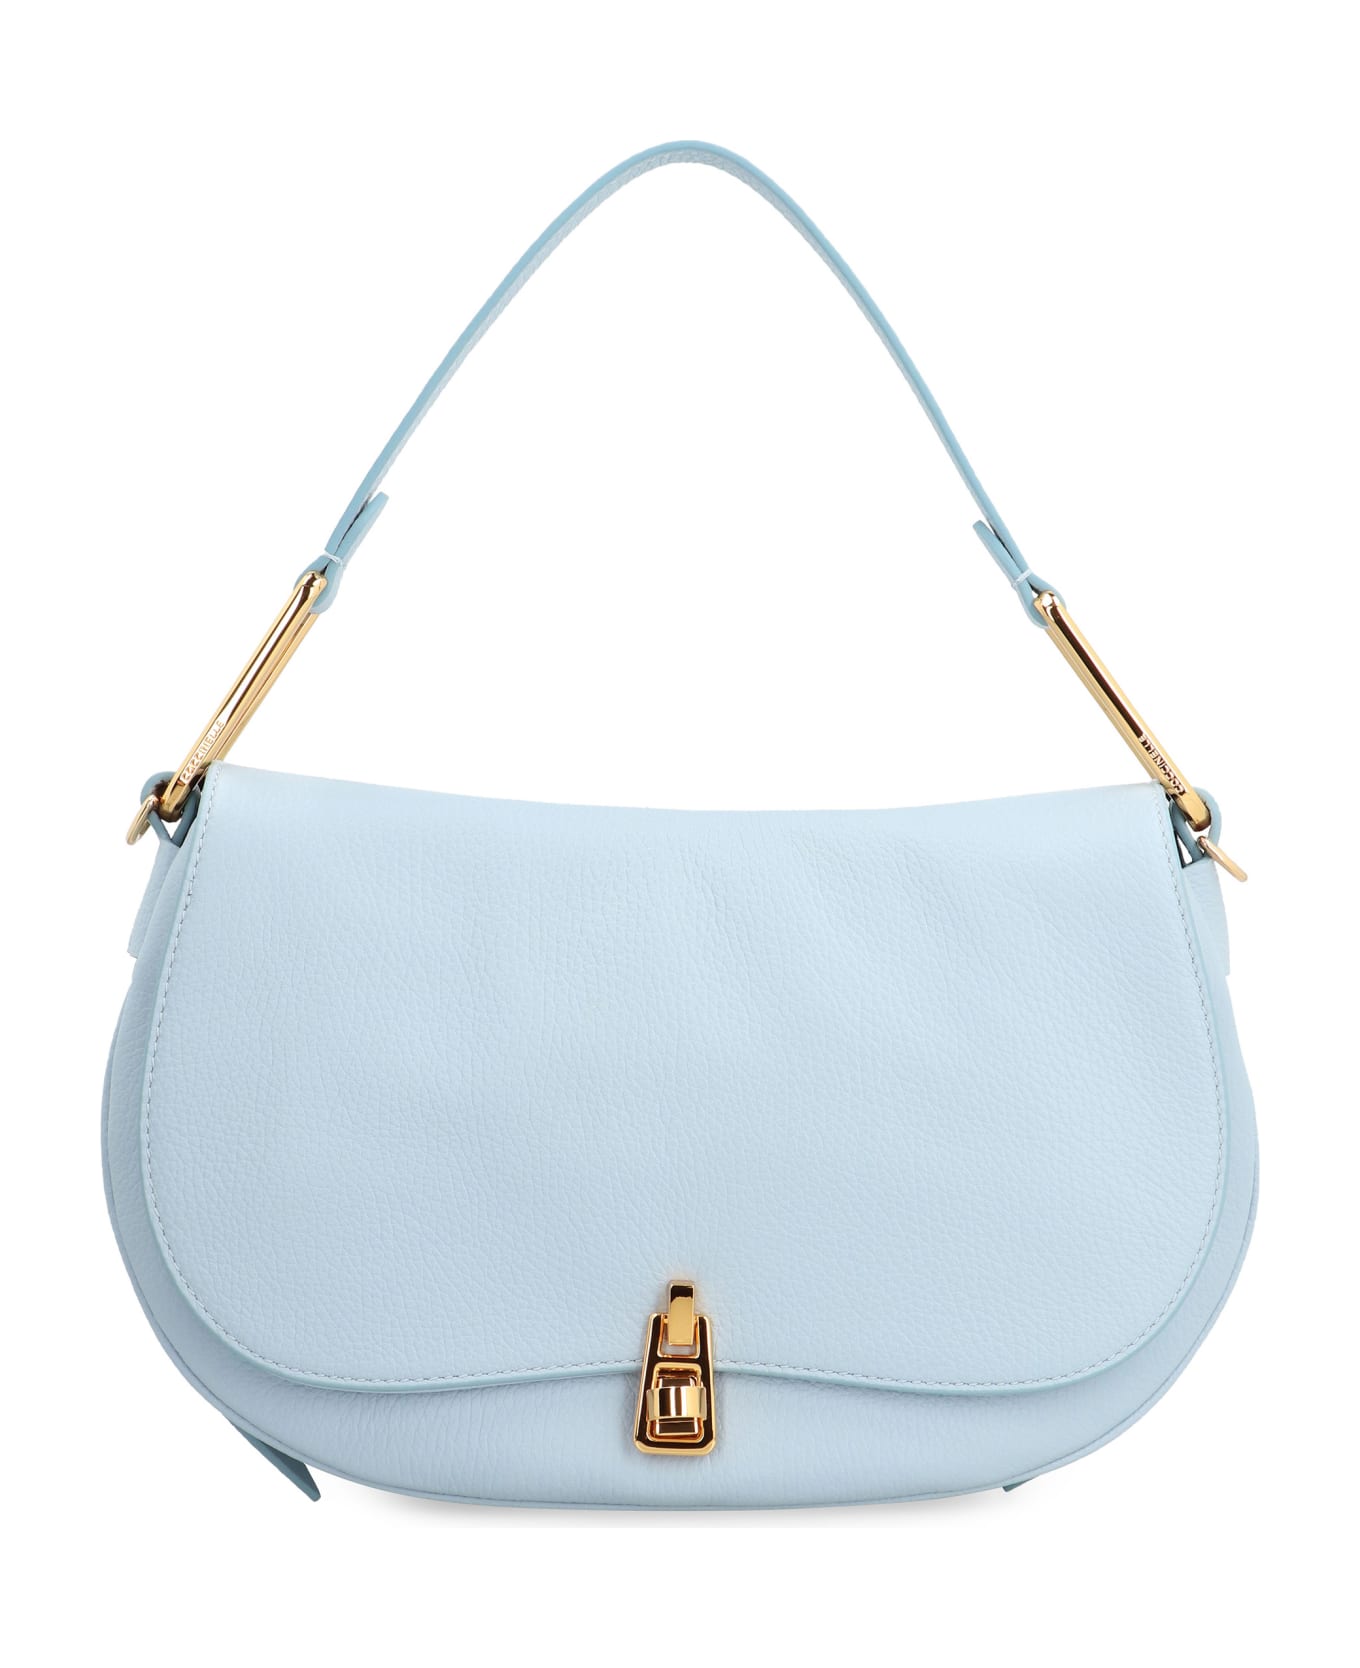 Coccinelle Magie Soft Leather Handbag - Light Blue トートバッグ